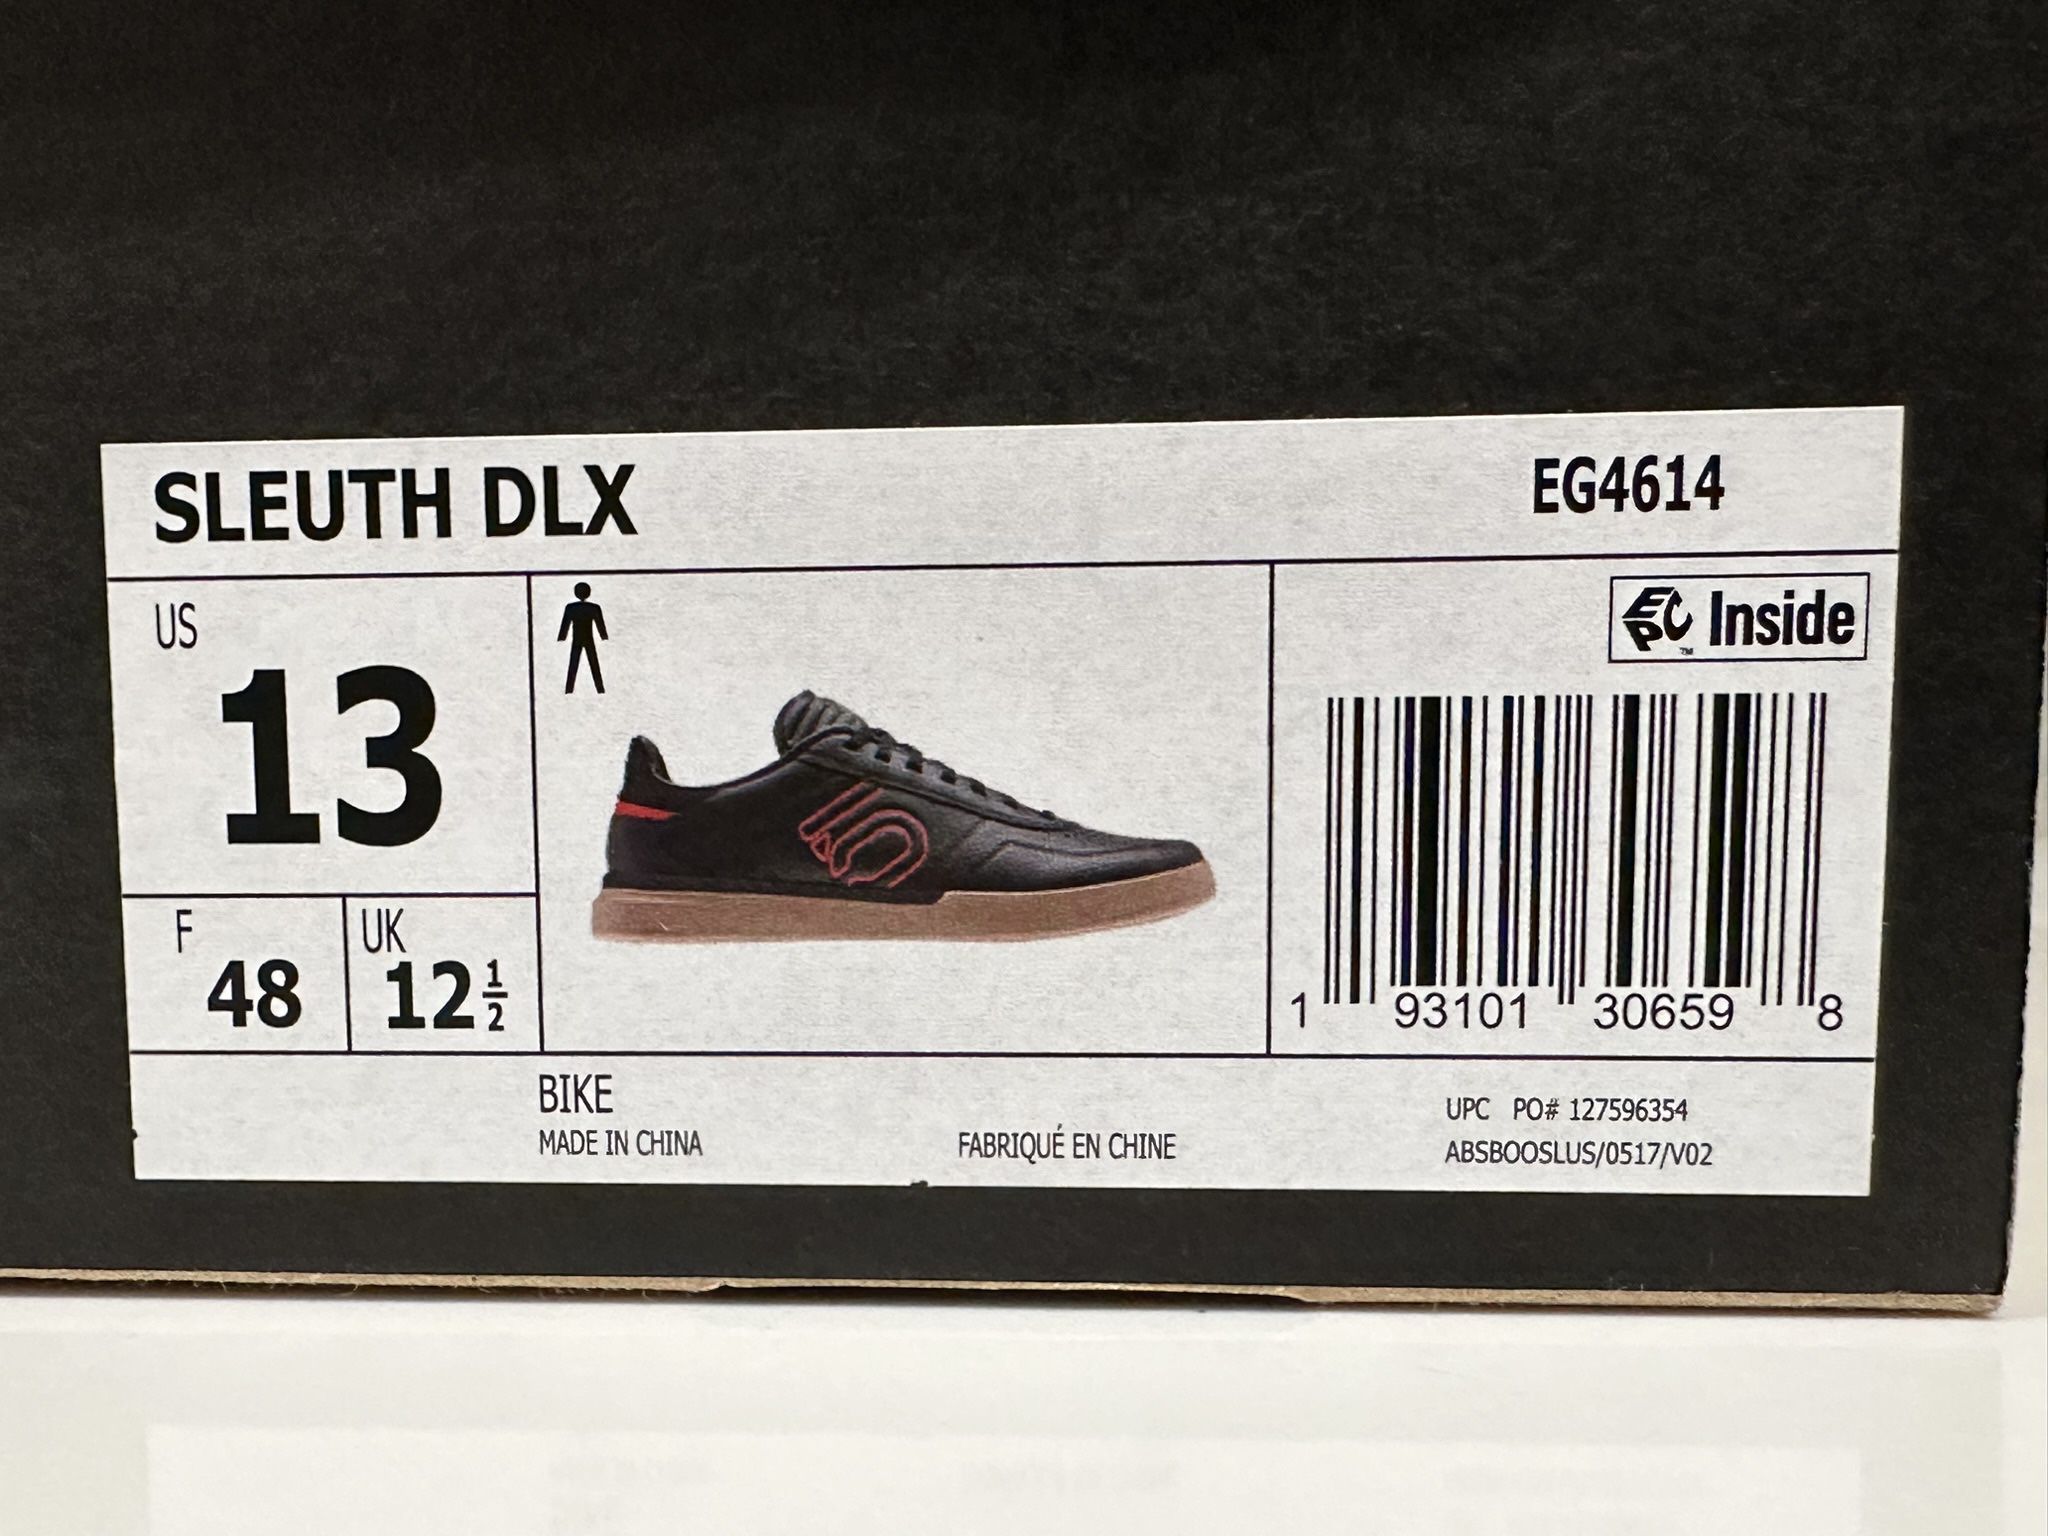 Adidas 5.10 Sleuth DLX 13